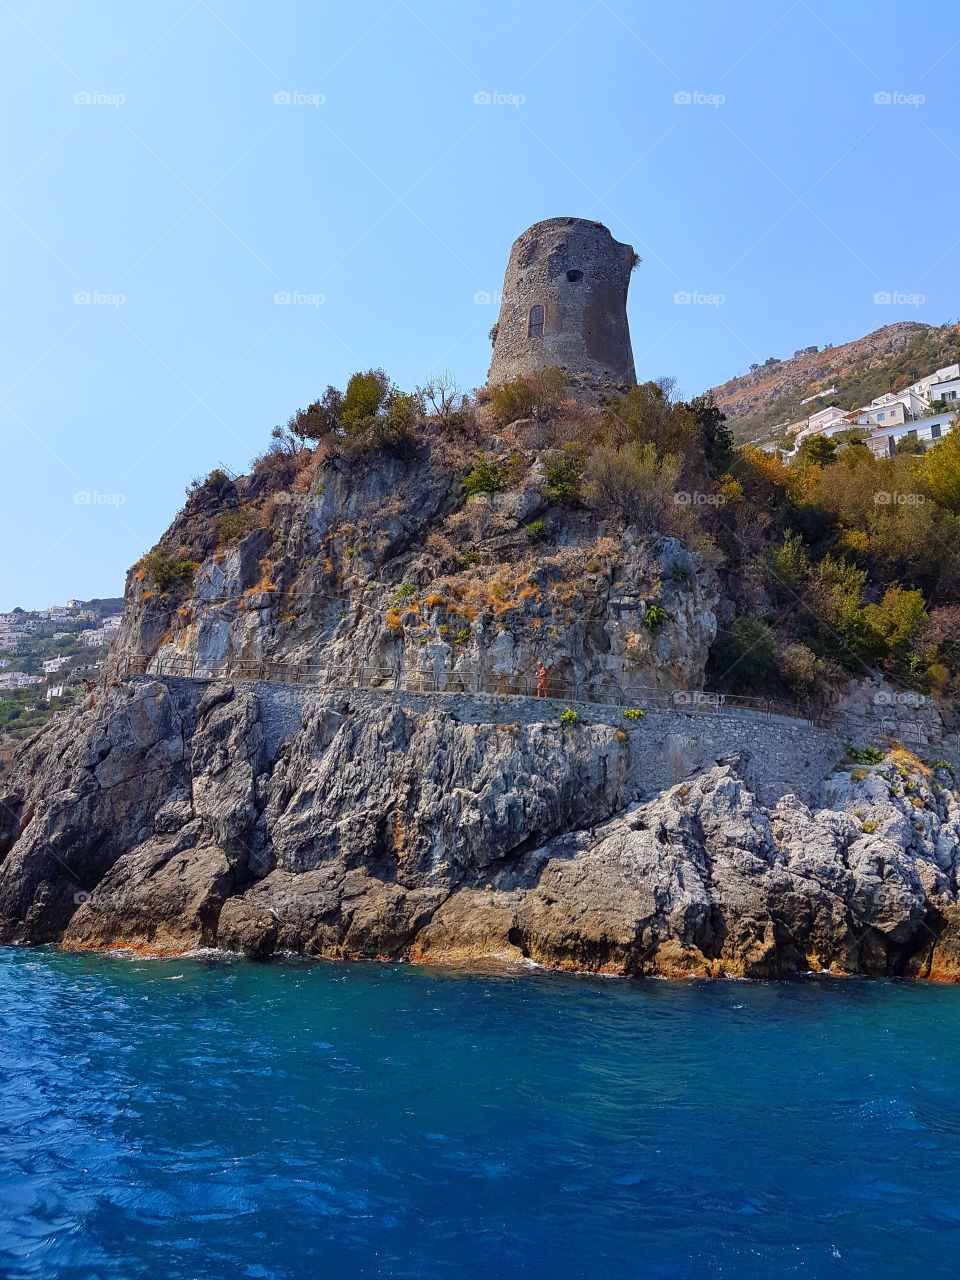 Costiera Amalfitana